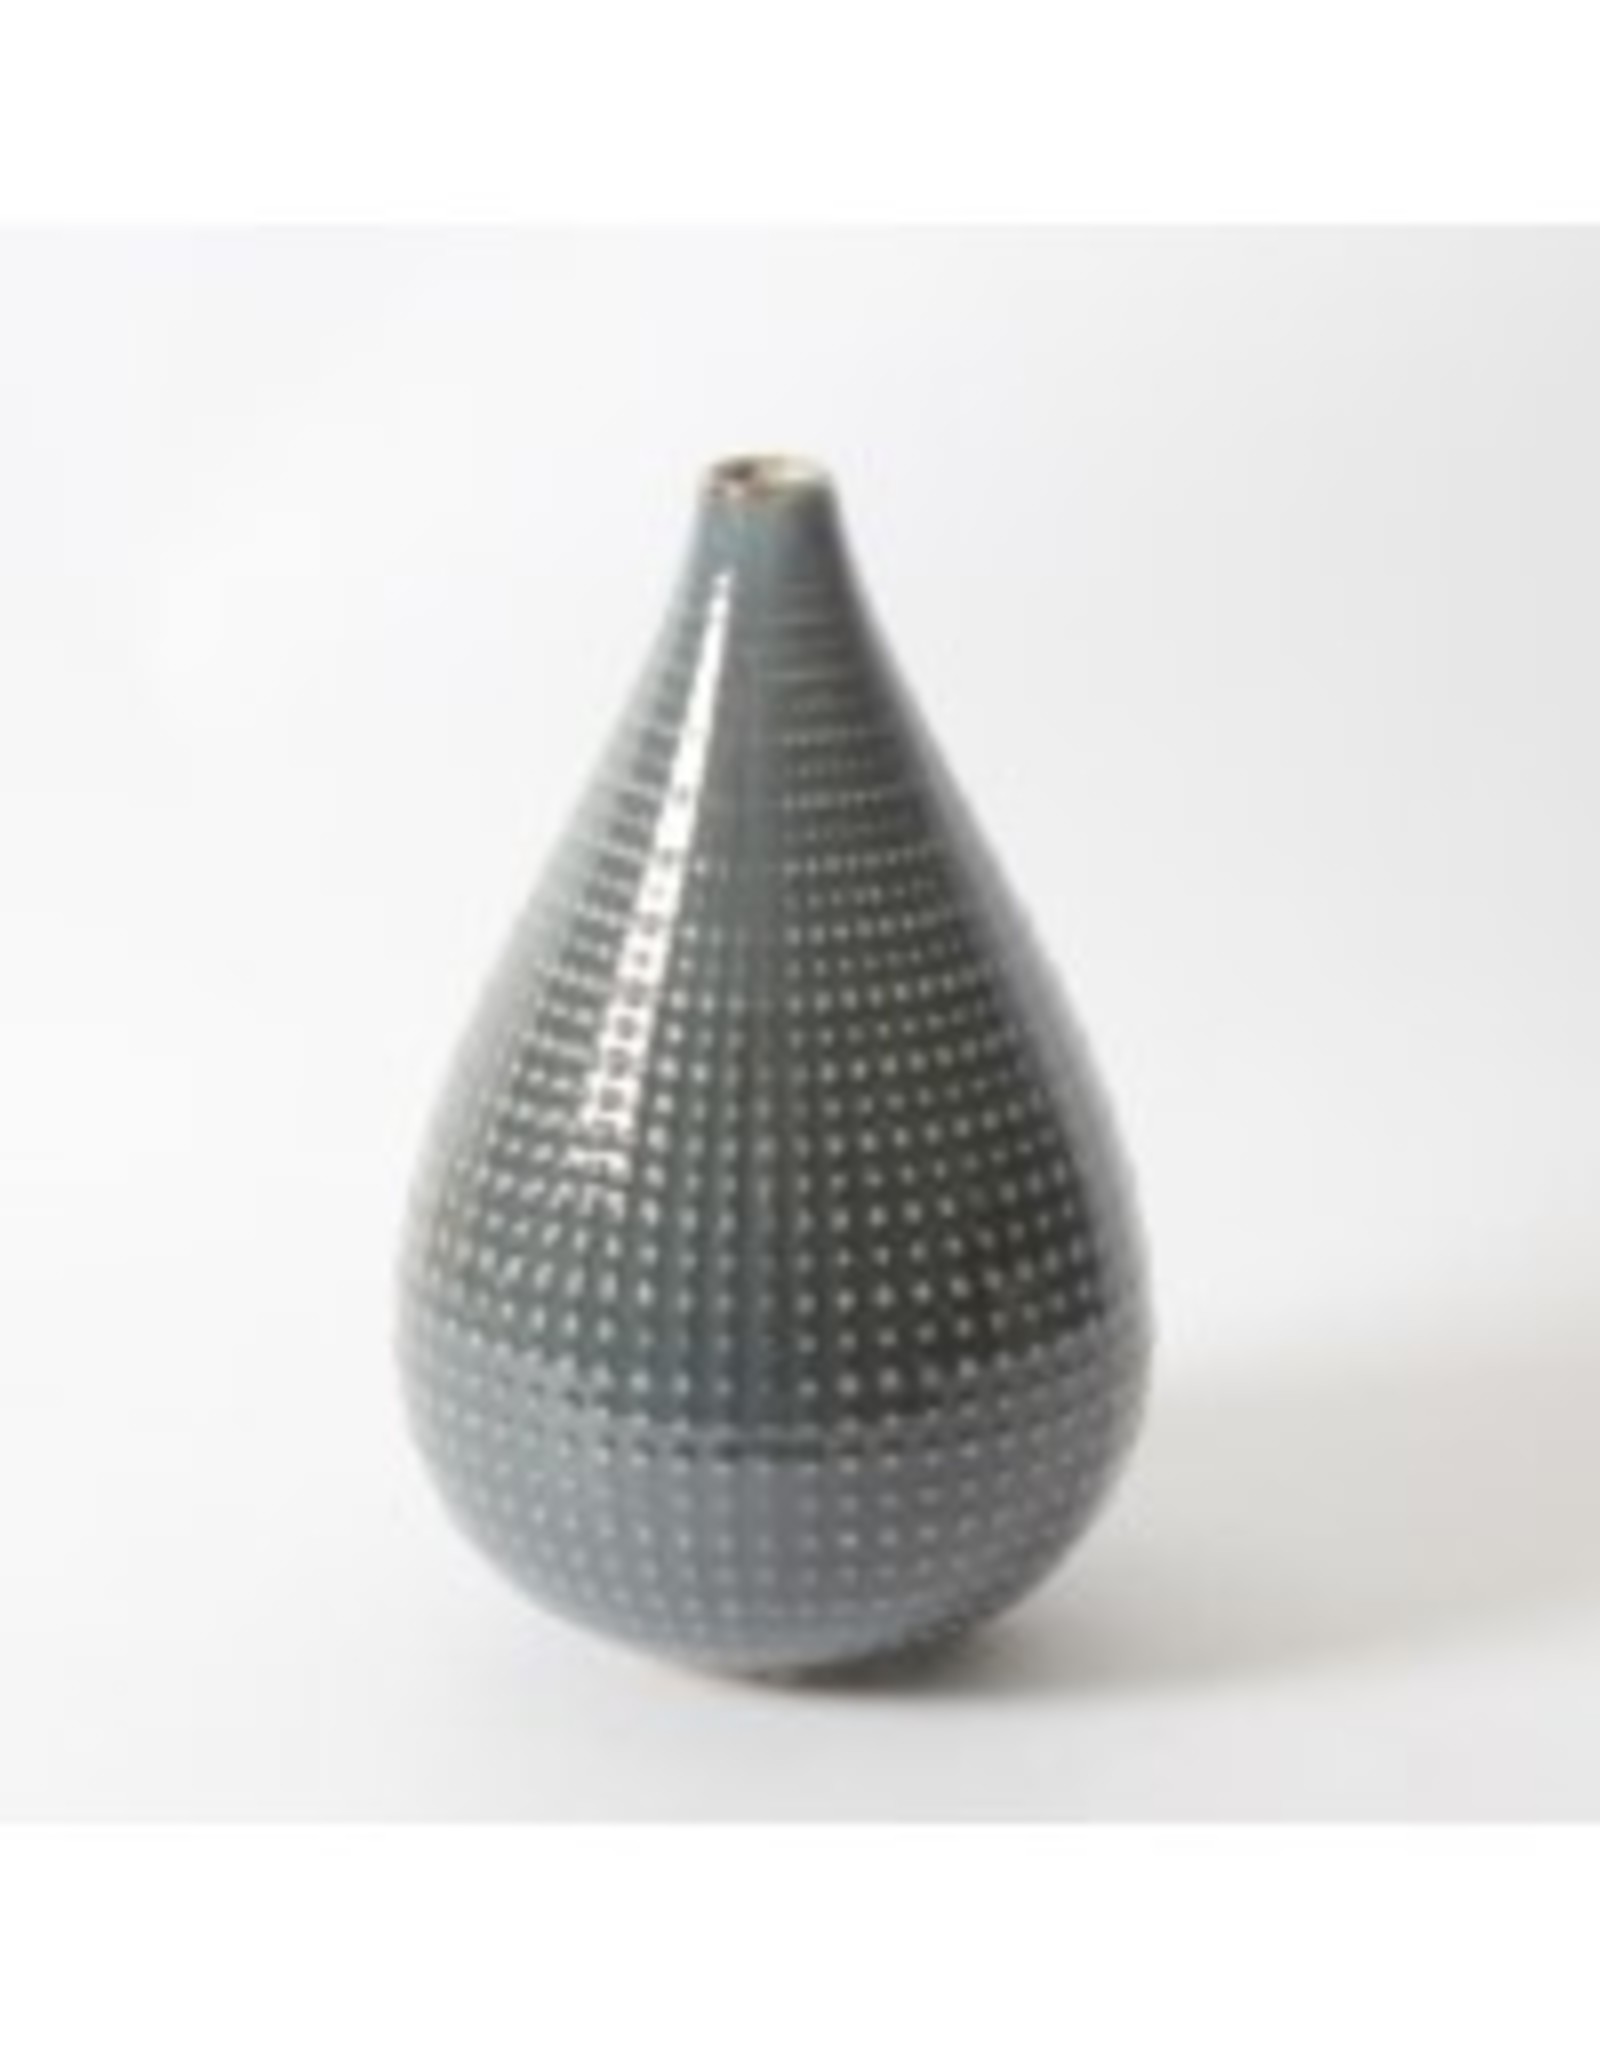 Vase CJ Ceramic Blue Gold Small 2929DM234200